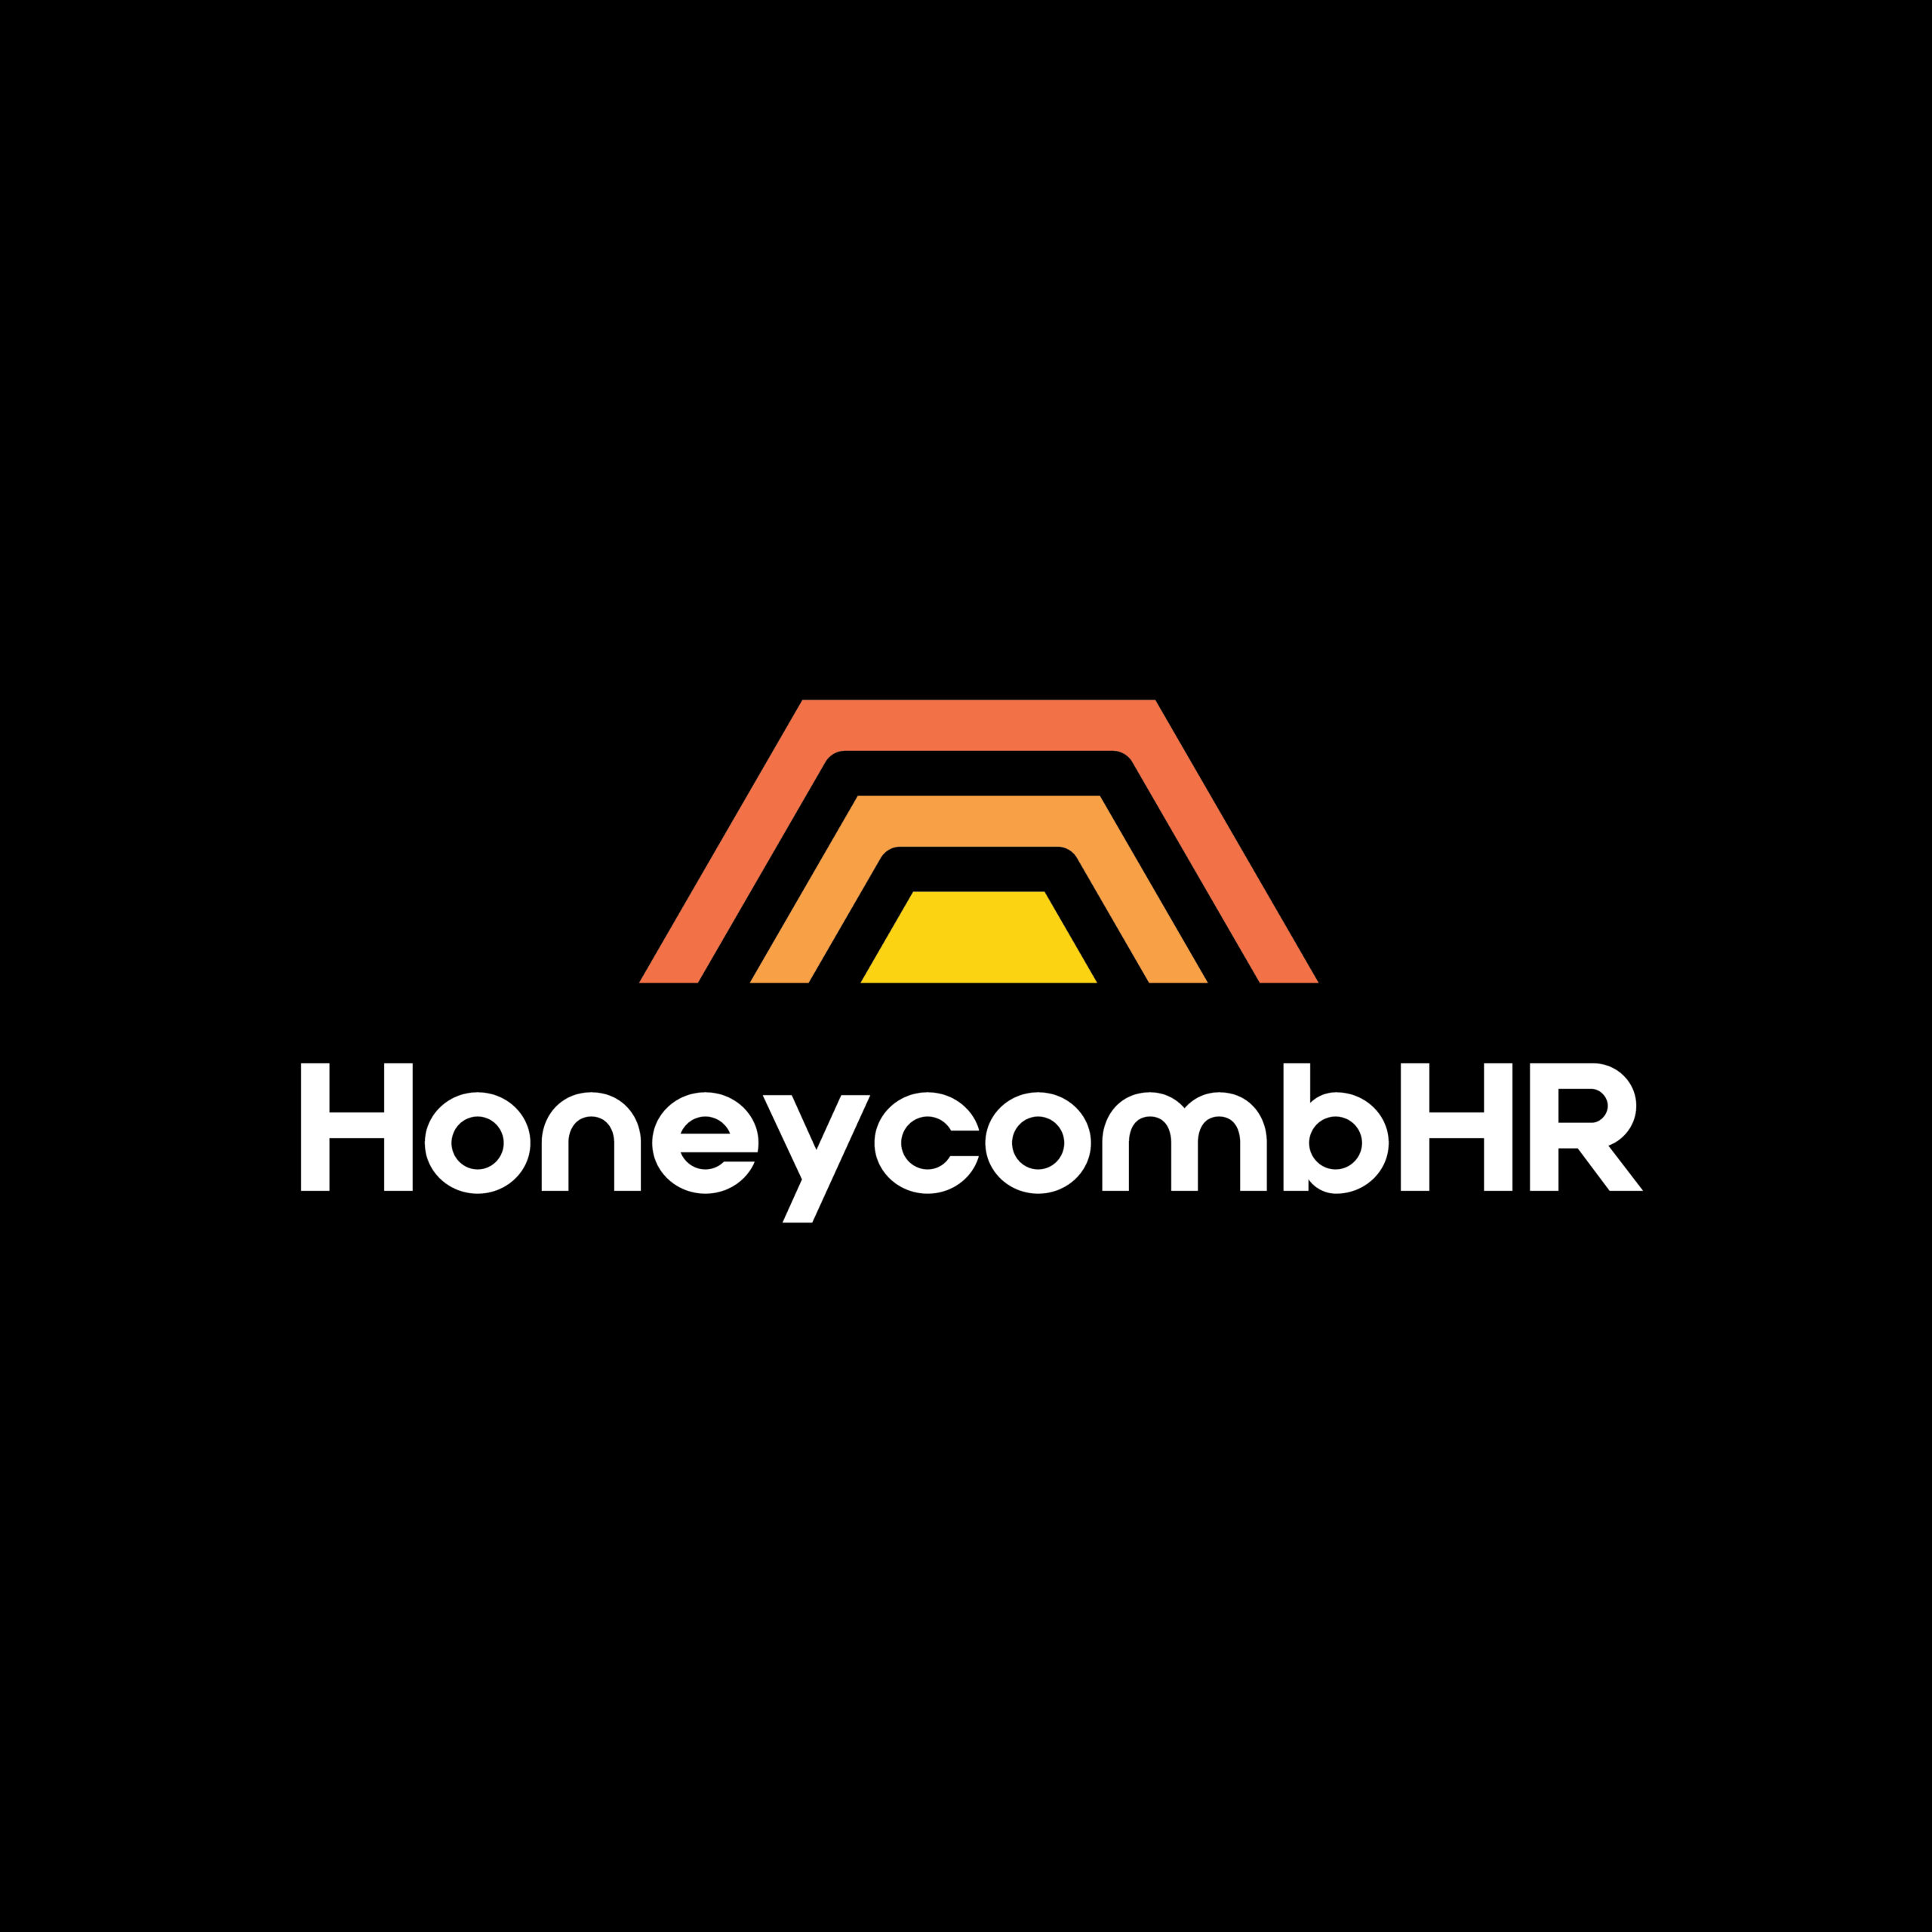 HoneycombHR logo design on a black background by Stellen Design Branding Agency in Los Angeles Specializing in clean logo design